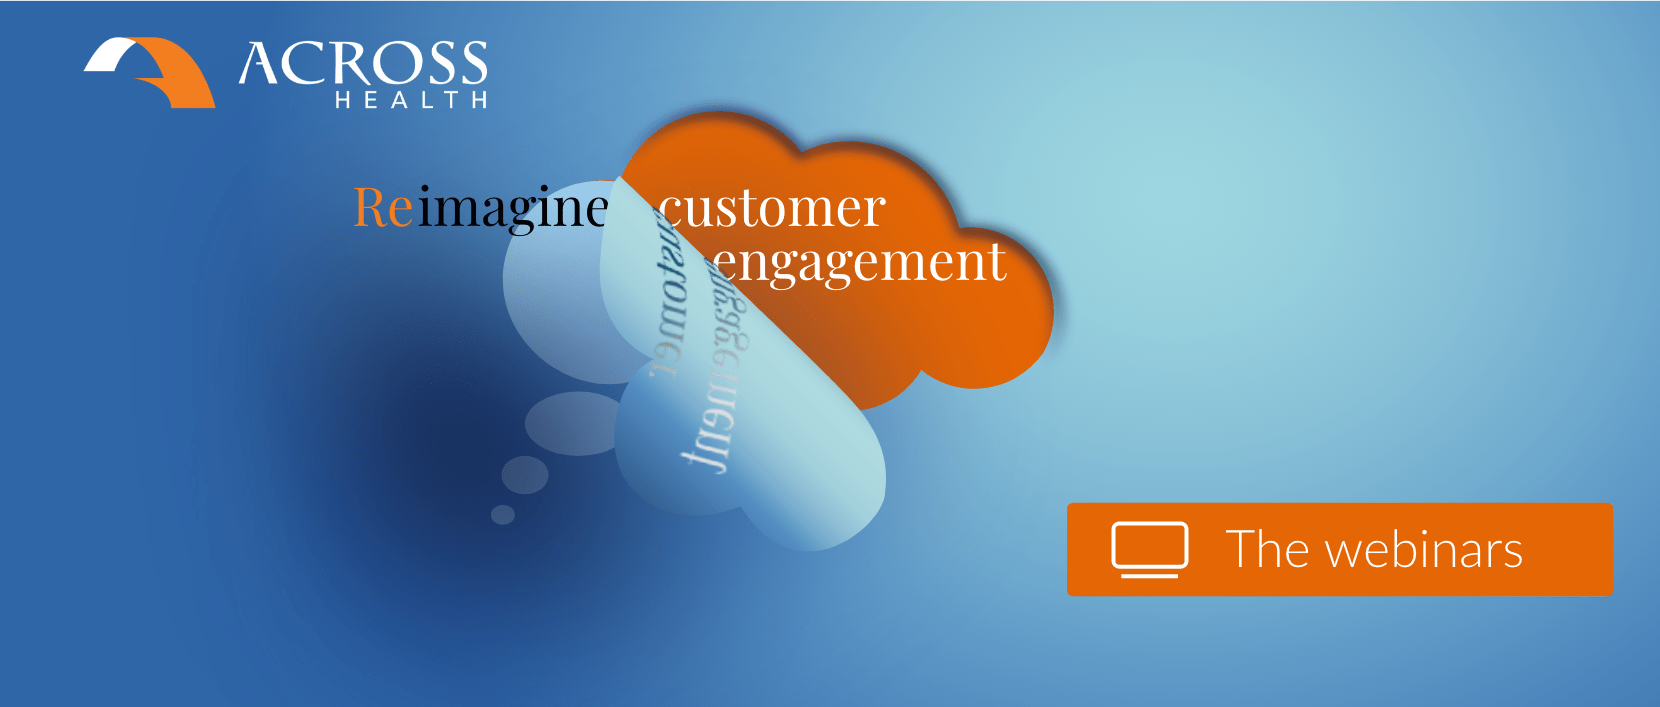 Reimagine customer engagement: webinar series 